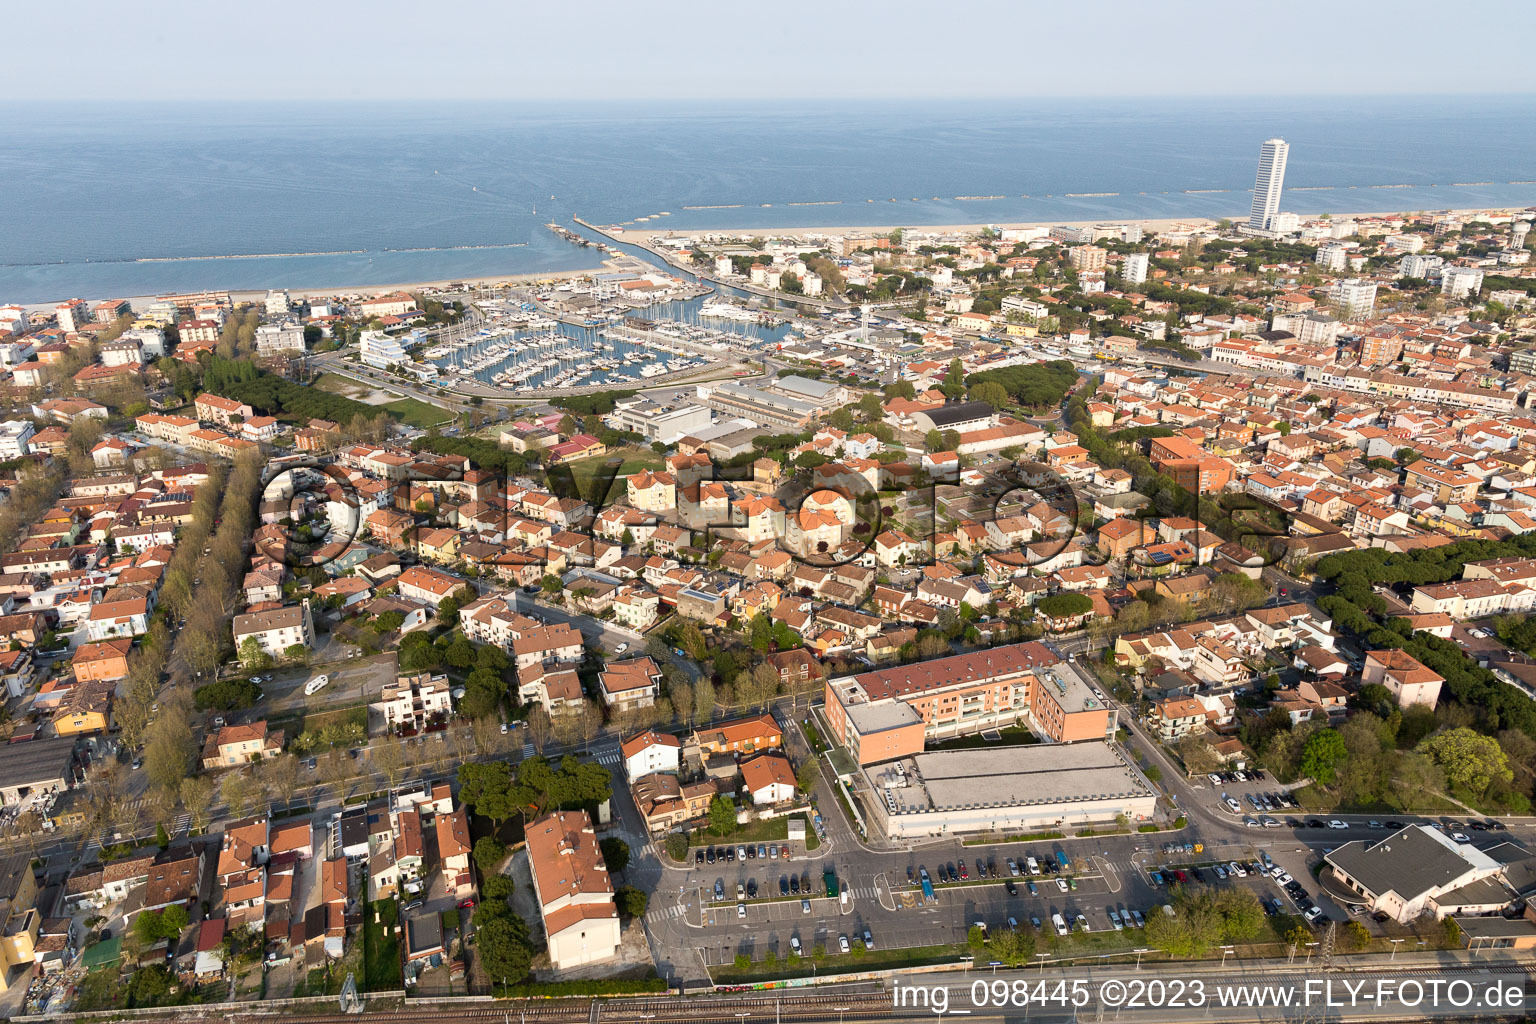 Aerial photograpy of Cesenatico in the state Emilia Romagna, Italy